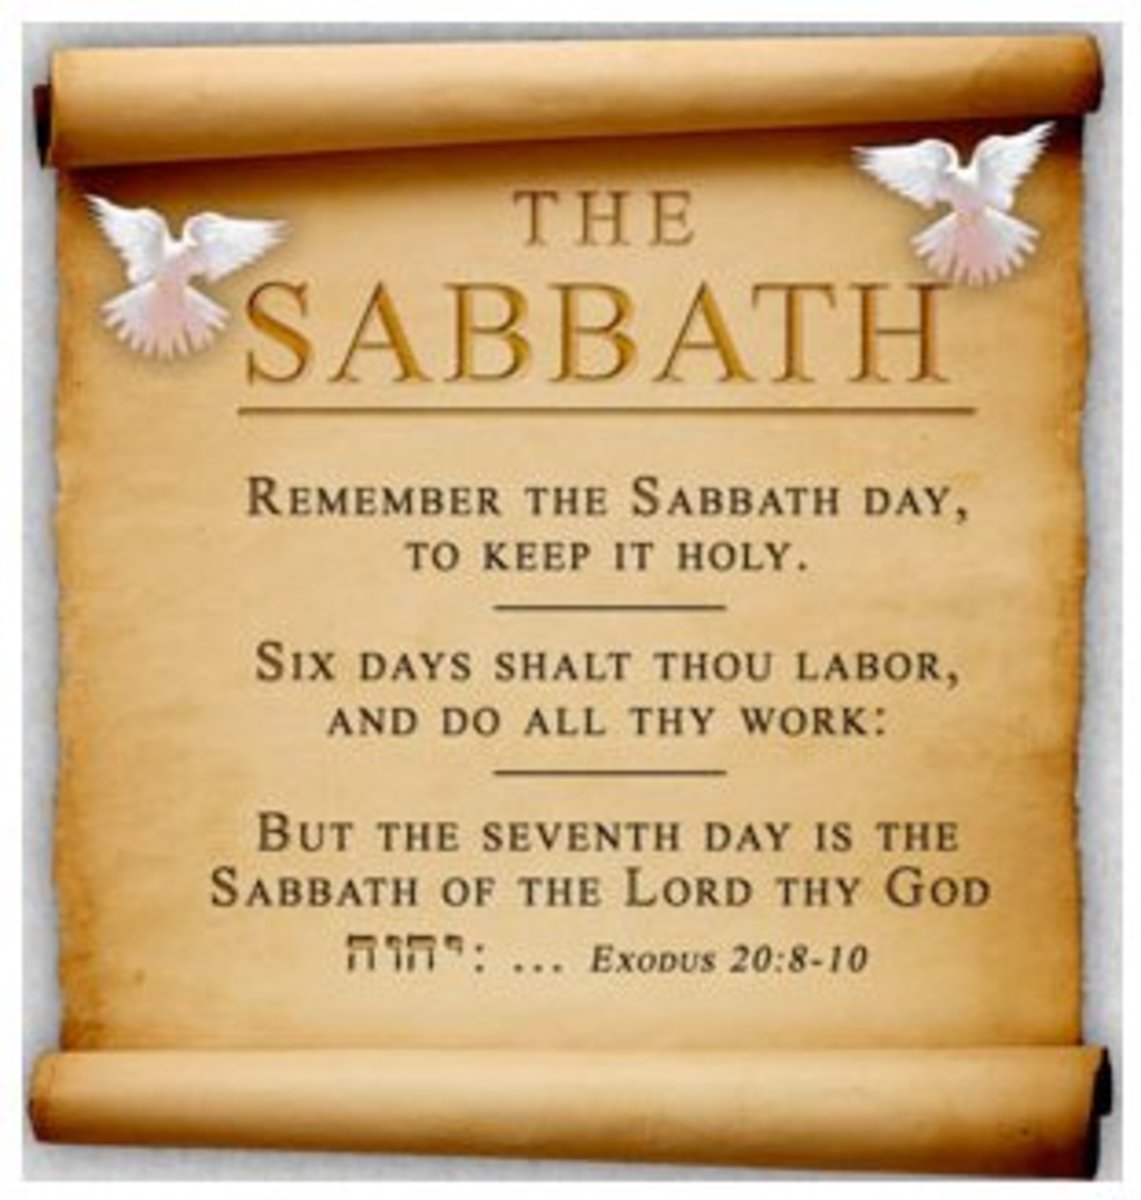 Bible Study on the Sabbath